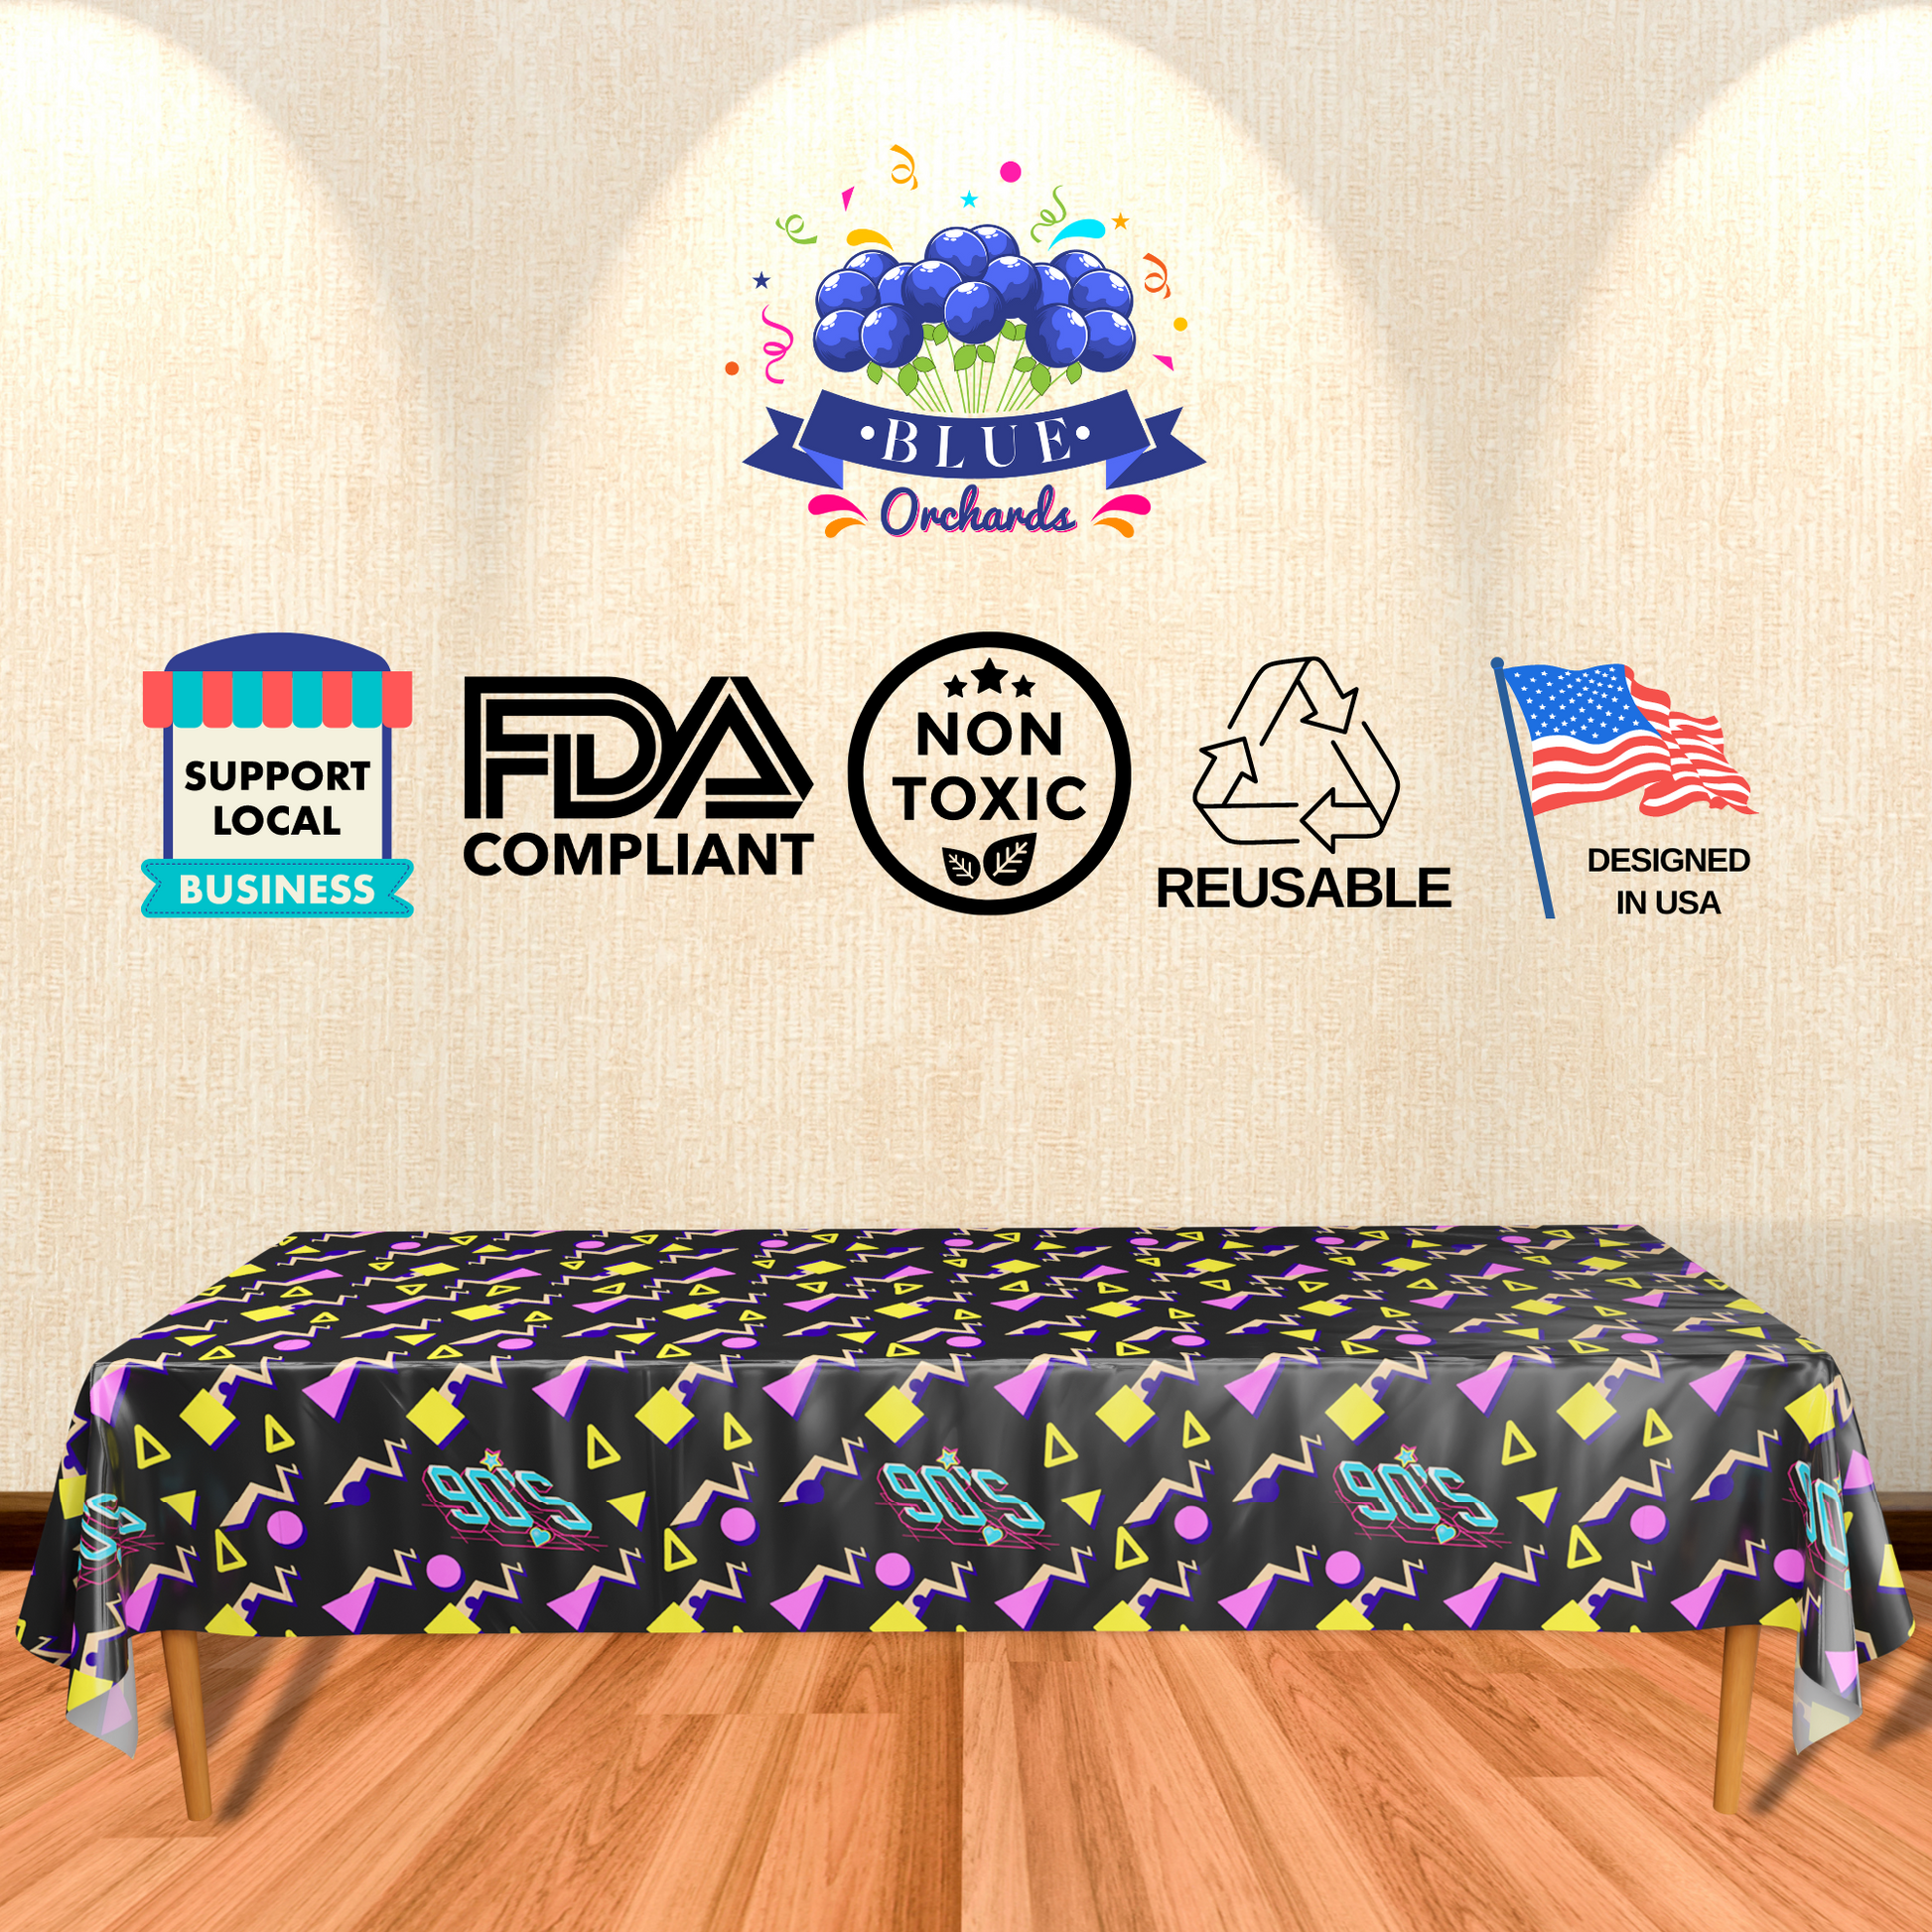 90s Party Table Cover - FDA compliant, Non Toxic, Reusable, Designed in USA